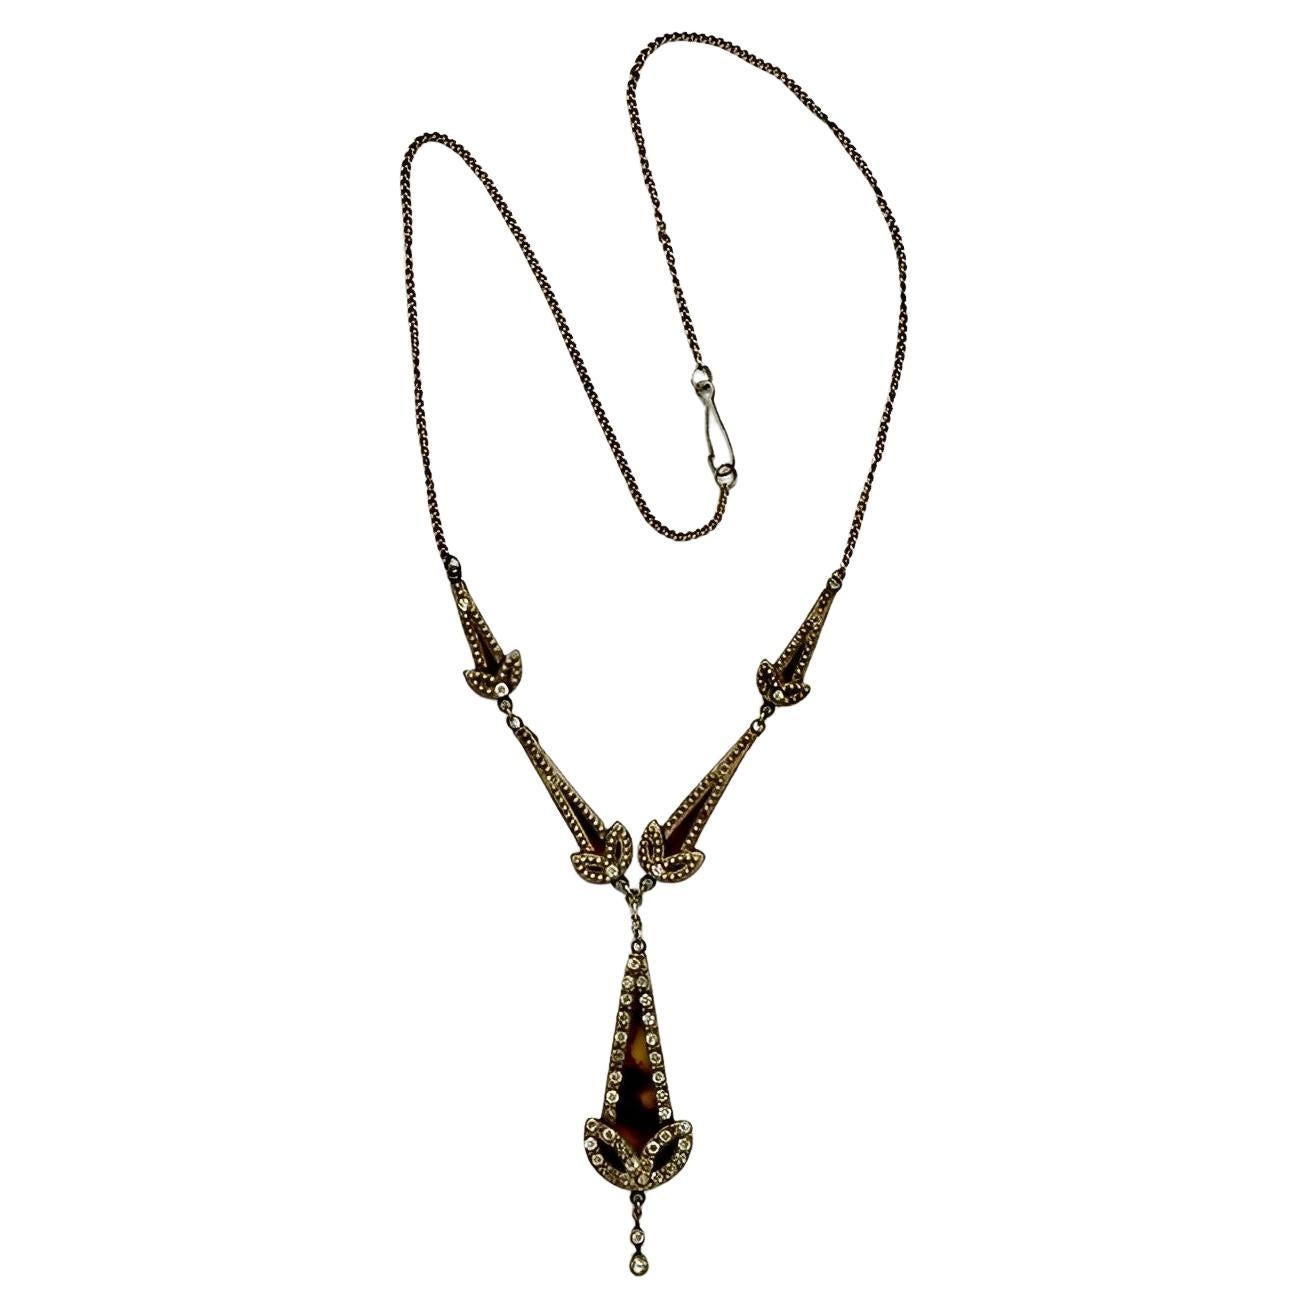 Art Deco Silver Tone Rhinestone Faux Tortoiseshell Necklace with Drop Pendant 